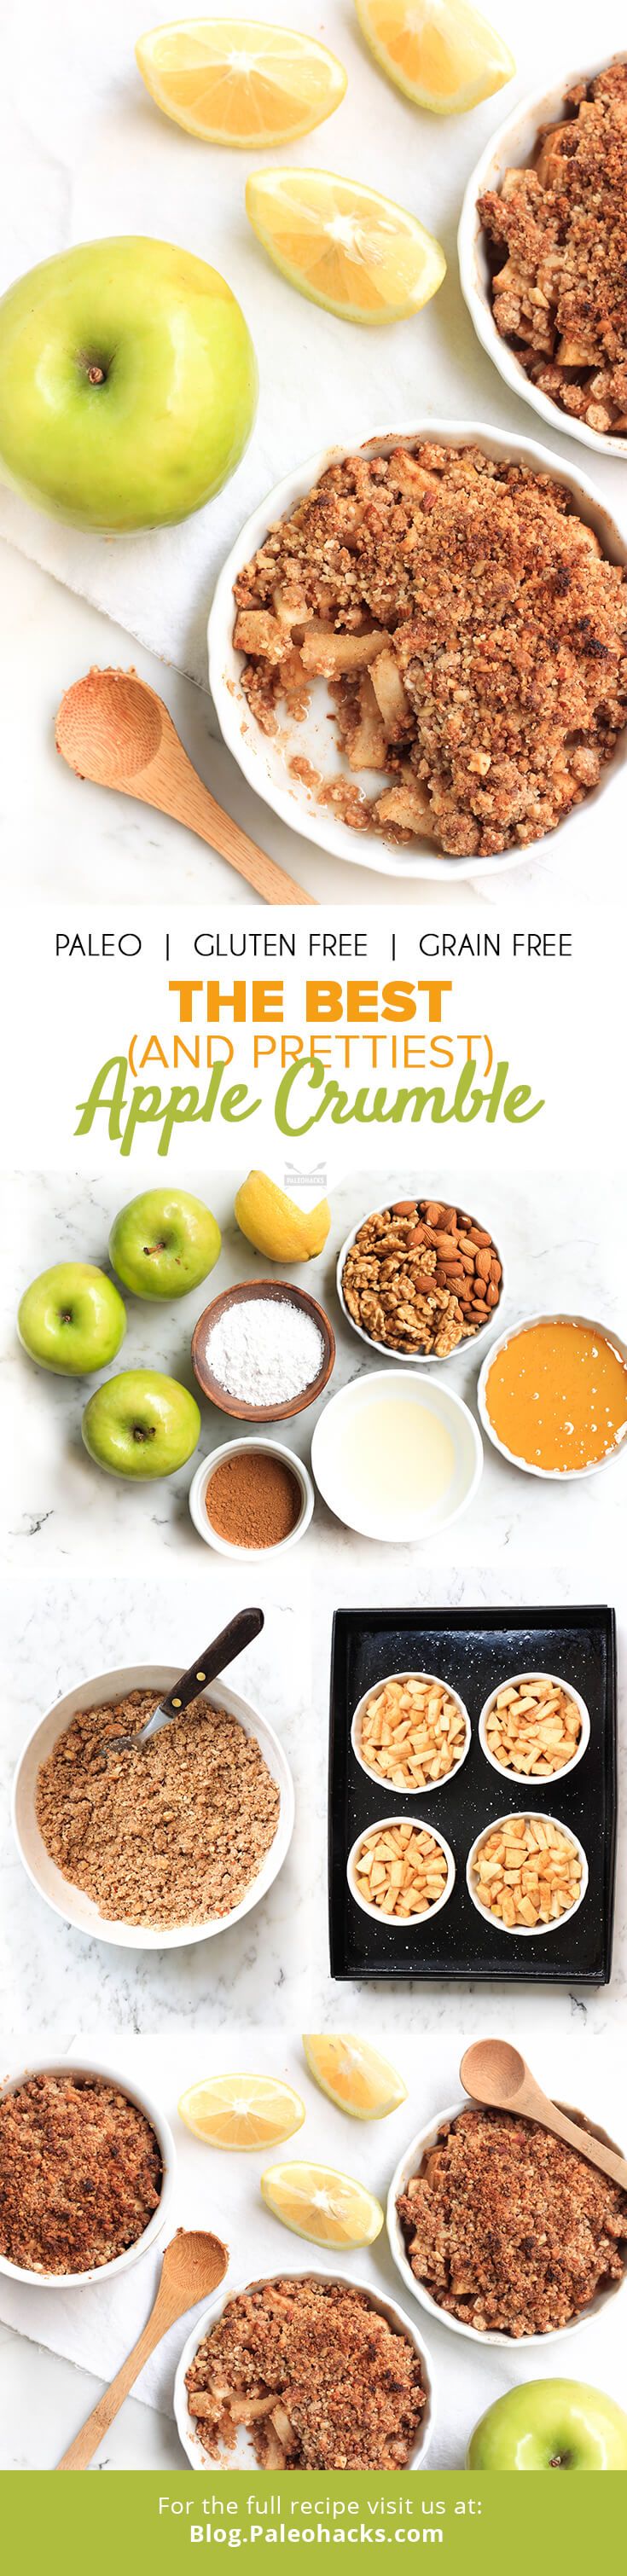 apple crumble recipe